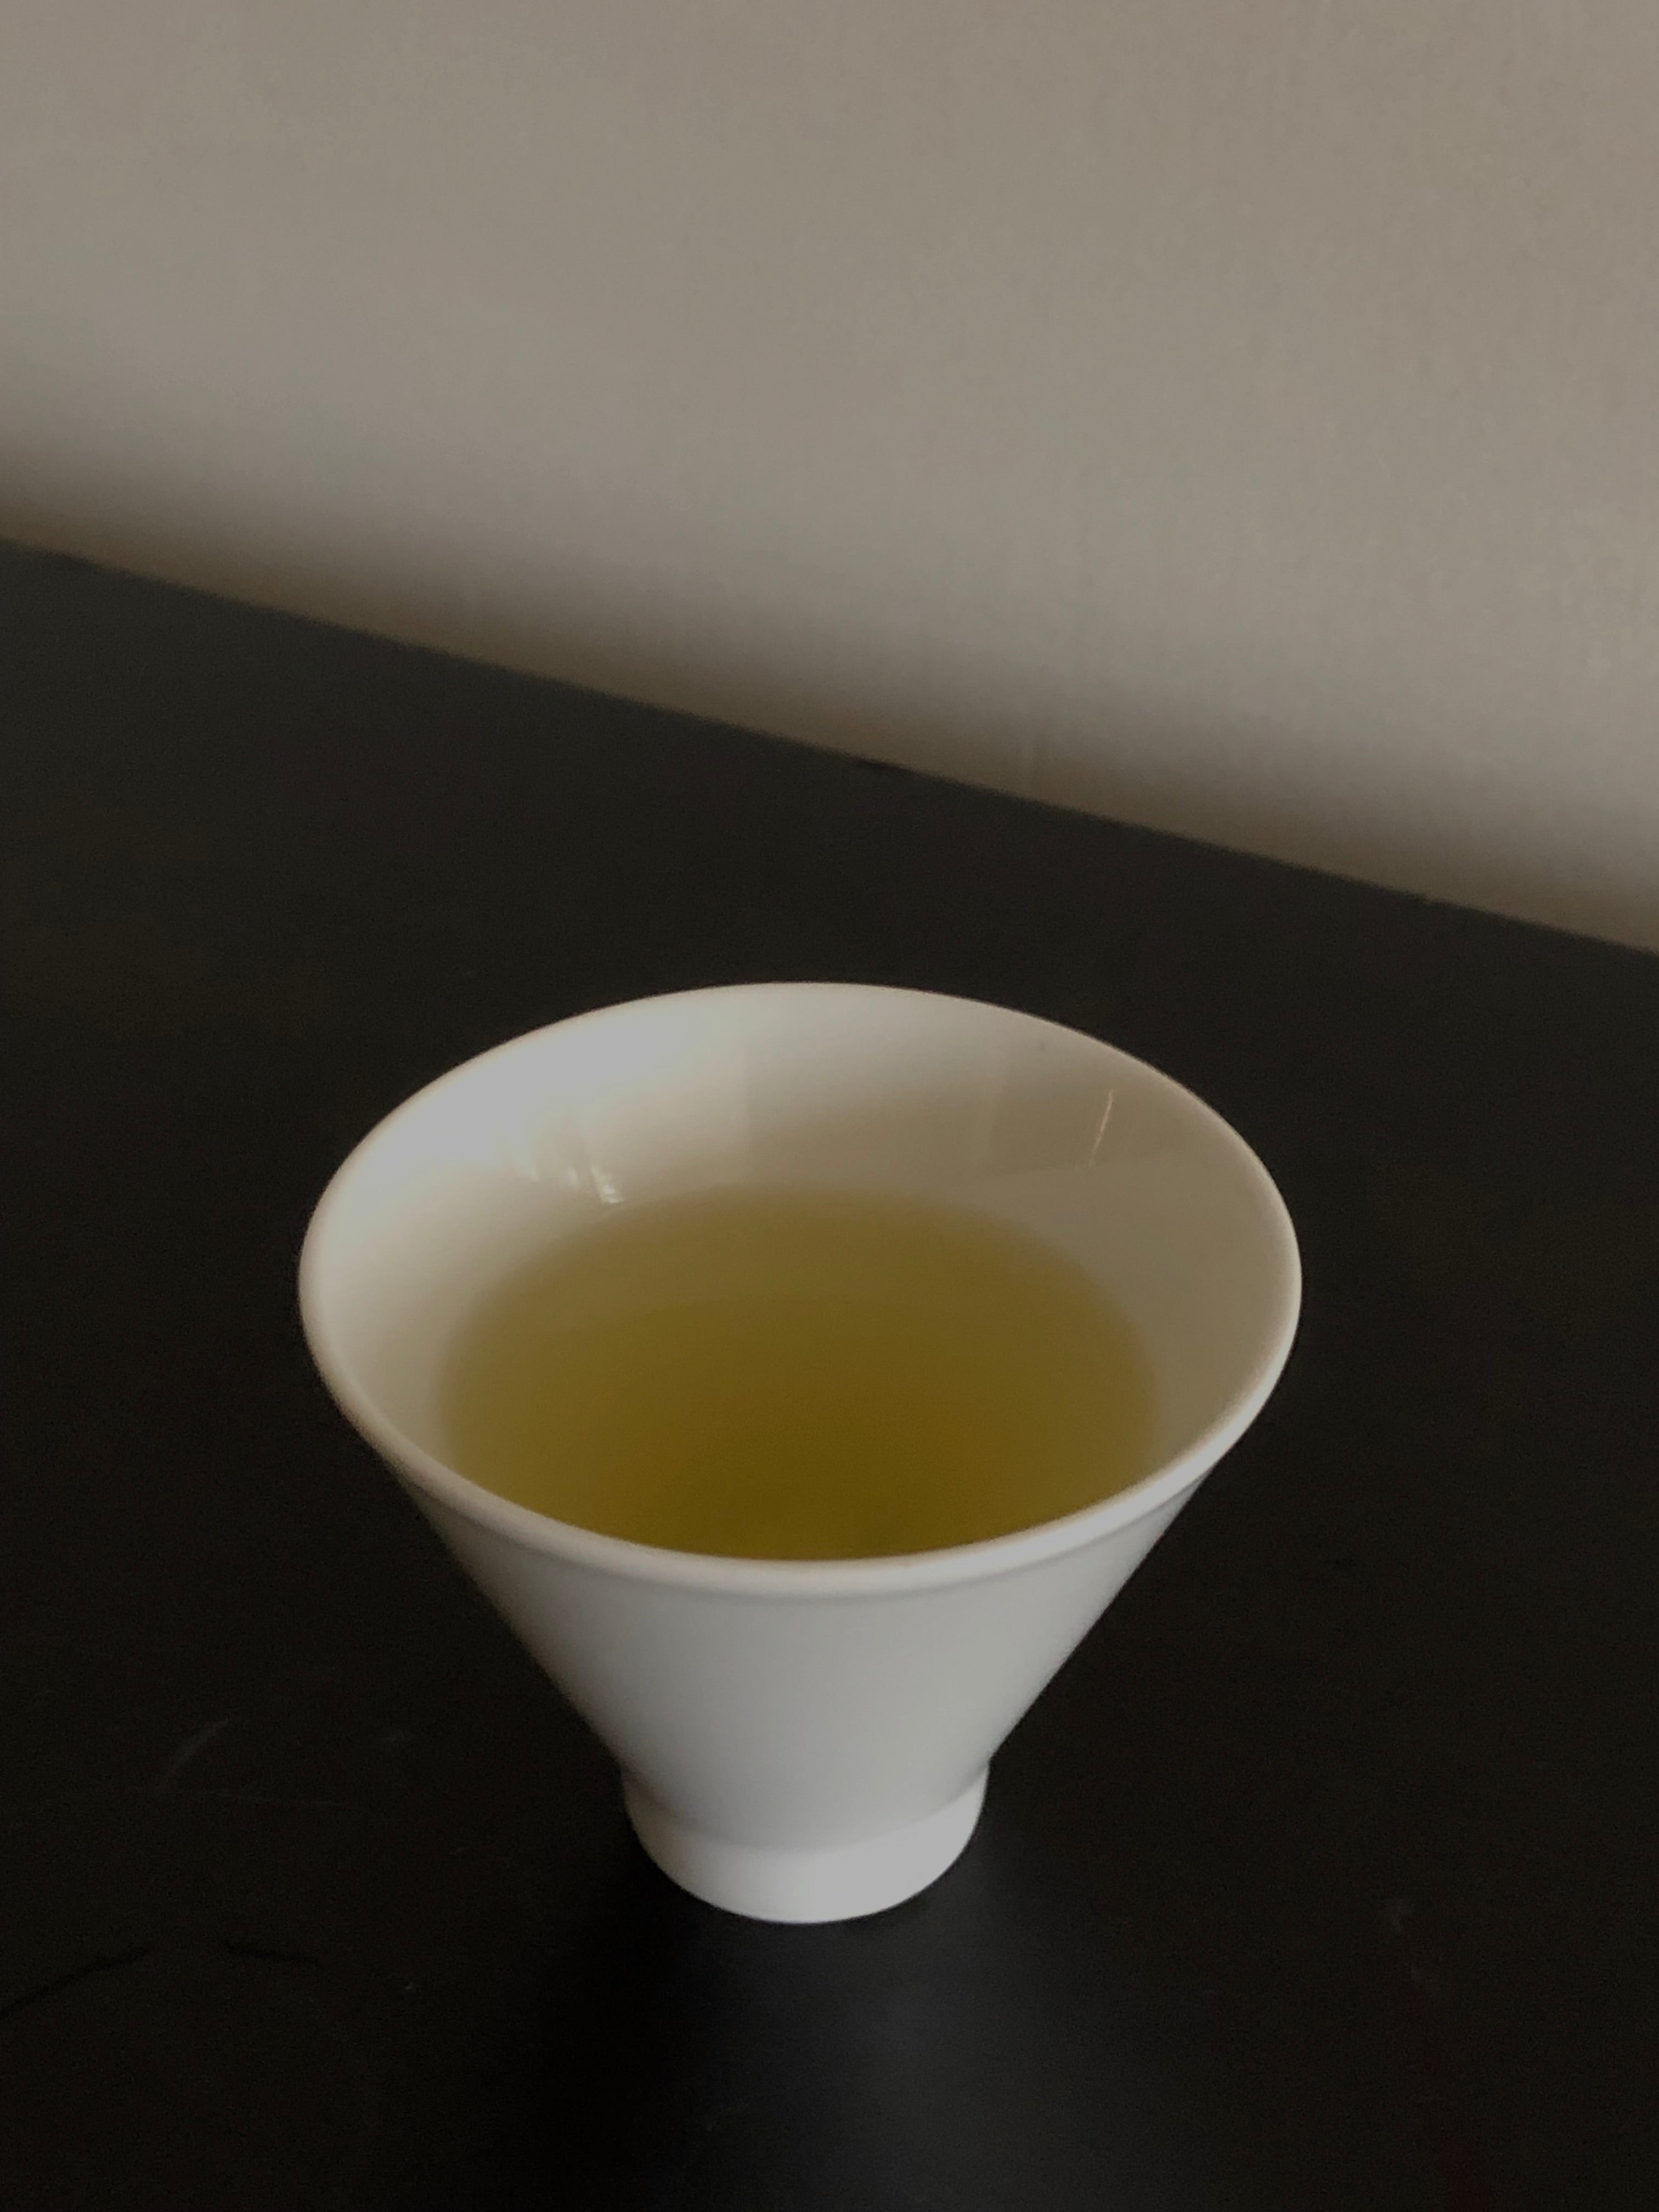 Dento hon gyokuro green tea loose leaf brew side view from Yame Fukuoka sold by Sabo Tea Australia - Chiyonoen